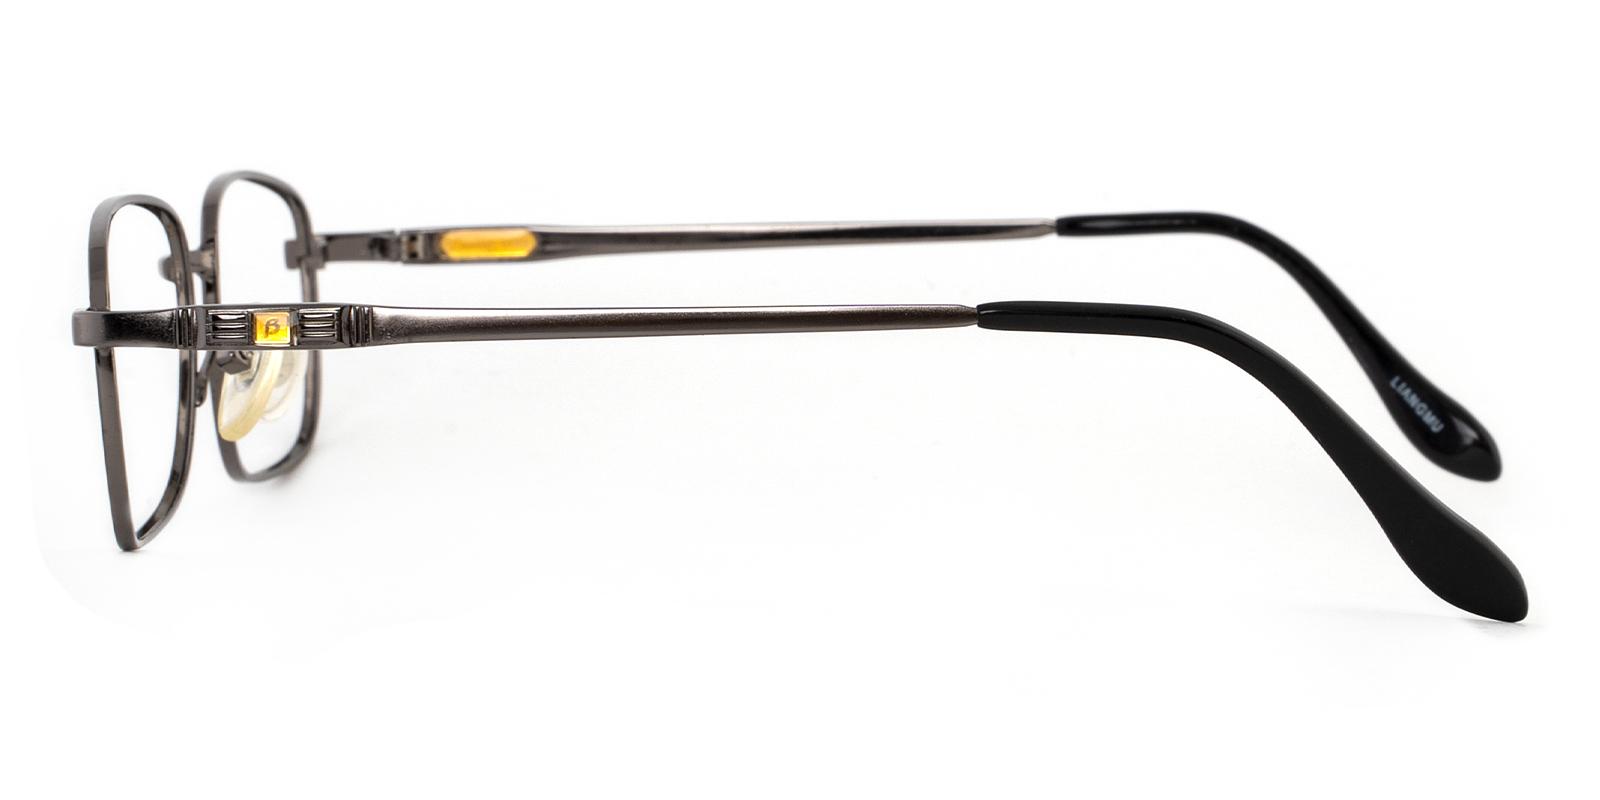 Aureate Gun Metal Eyeglasses , NosePads Frames from ABBE Glasses